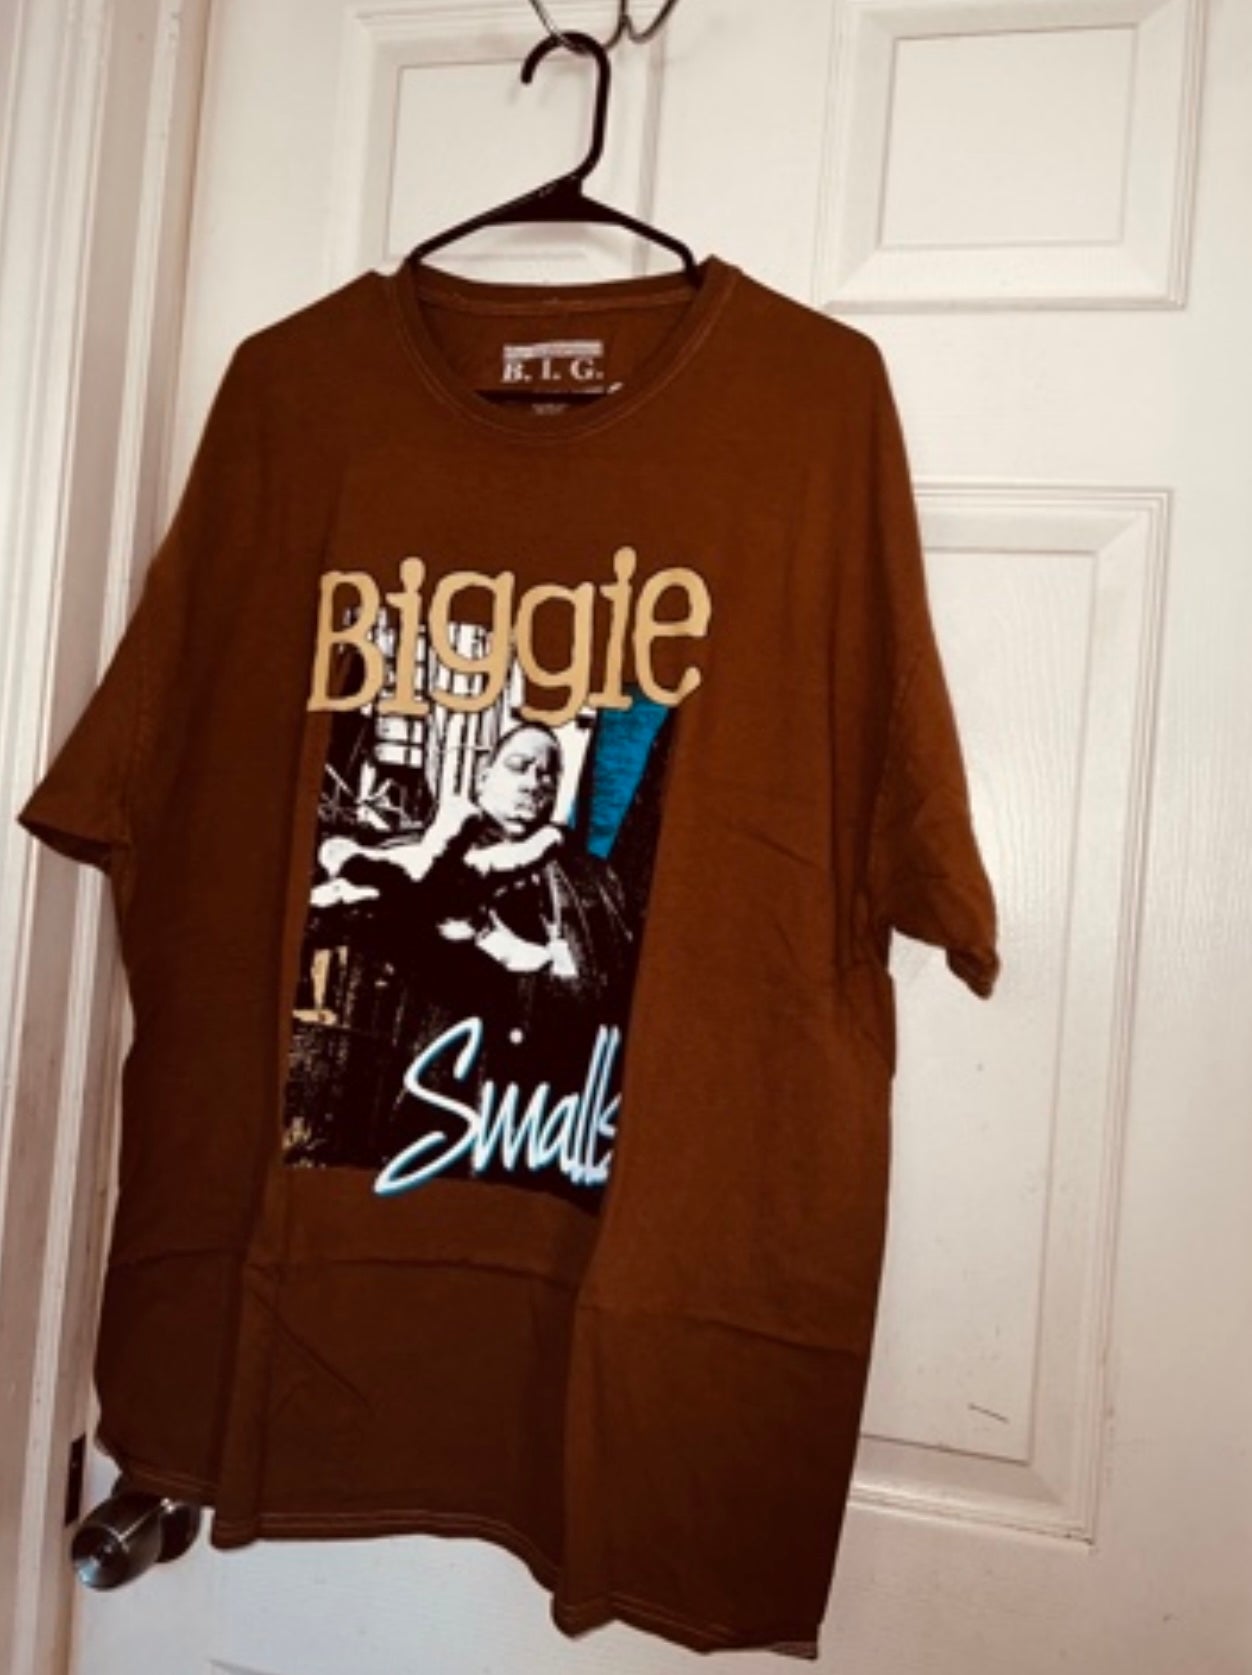 Biggie Smalls Oversized Distressed T-Shirt